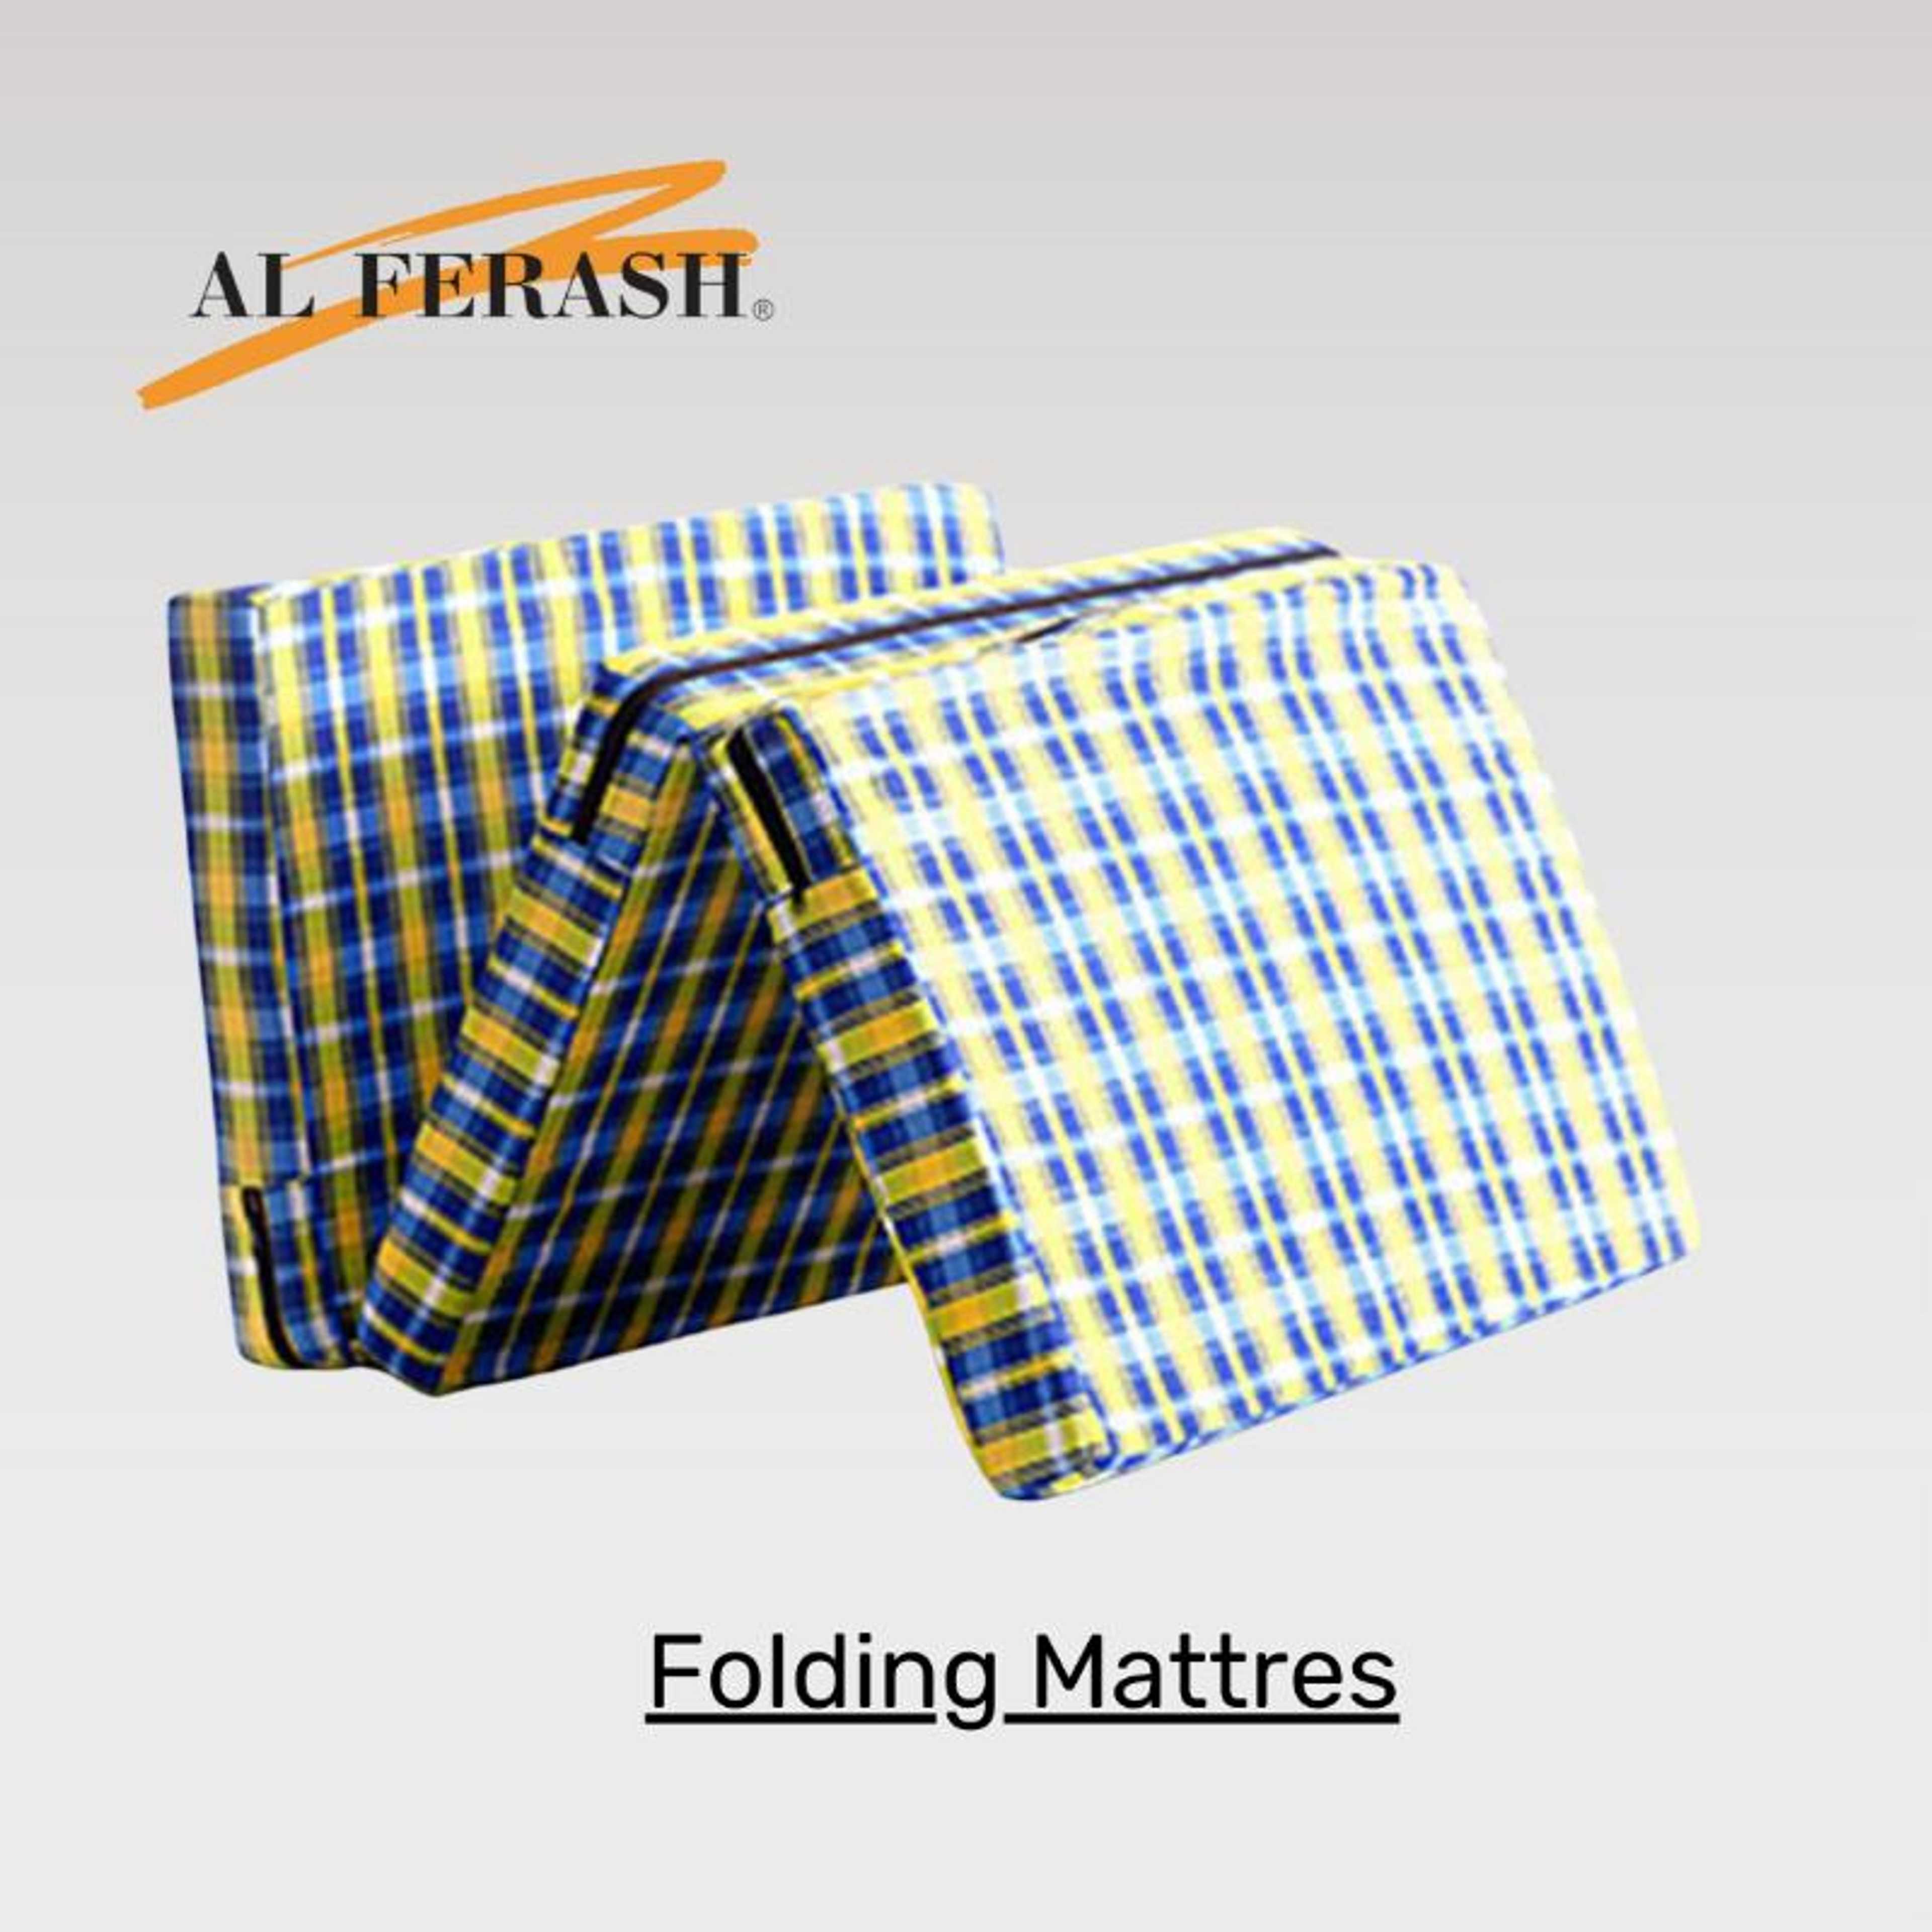 Folding Mattress With Free Mystery Flyer Different Designs - Al Ferash